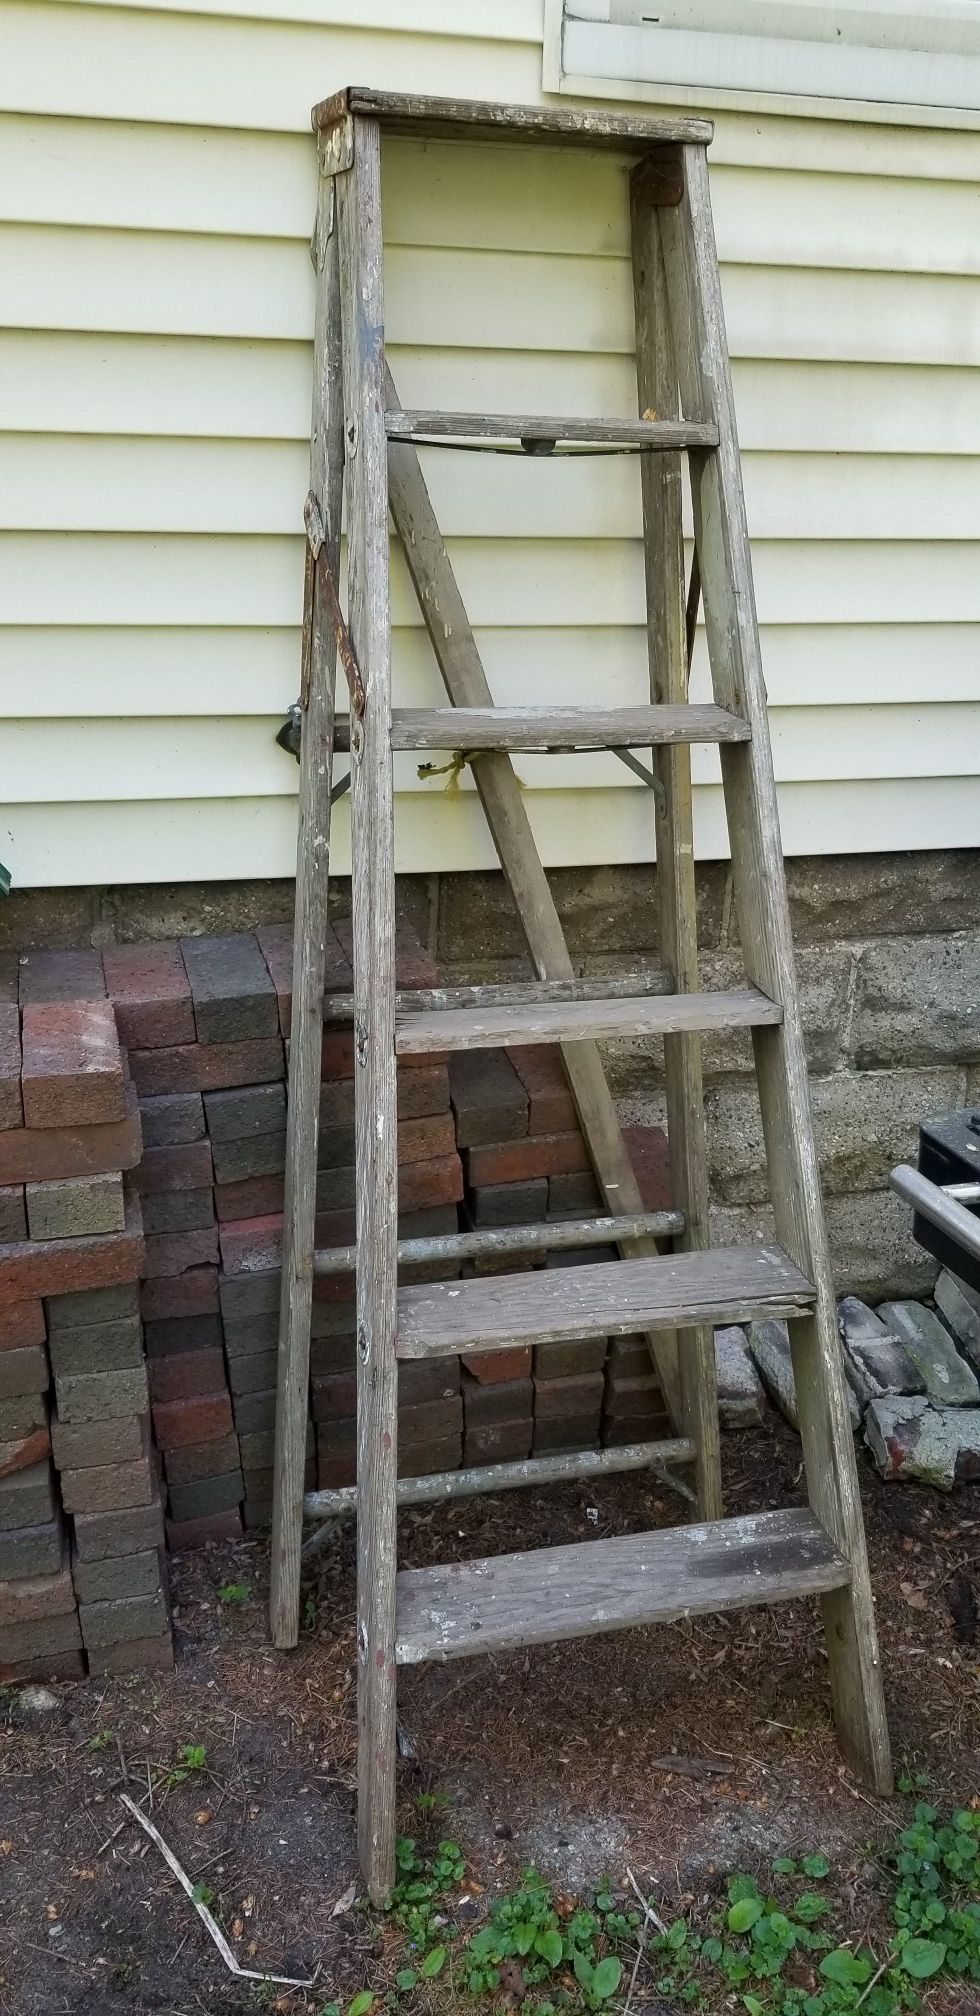 5 foot ladder